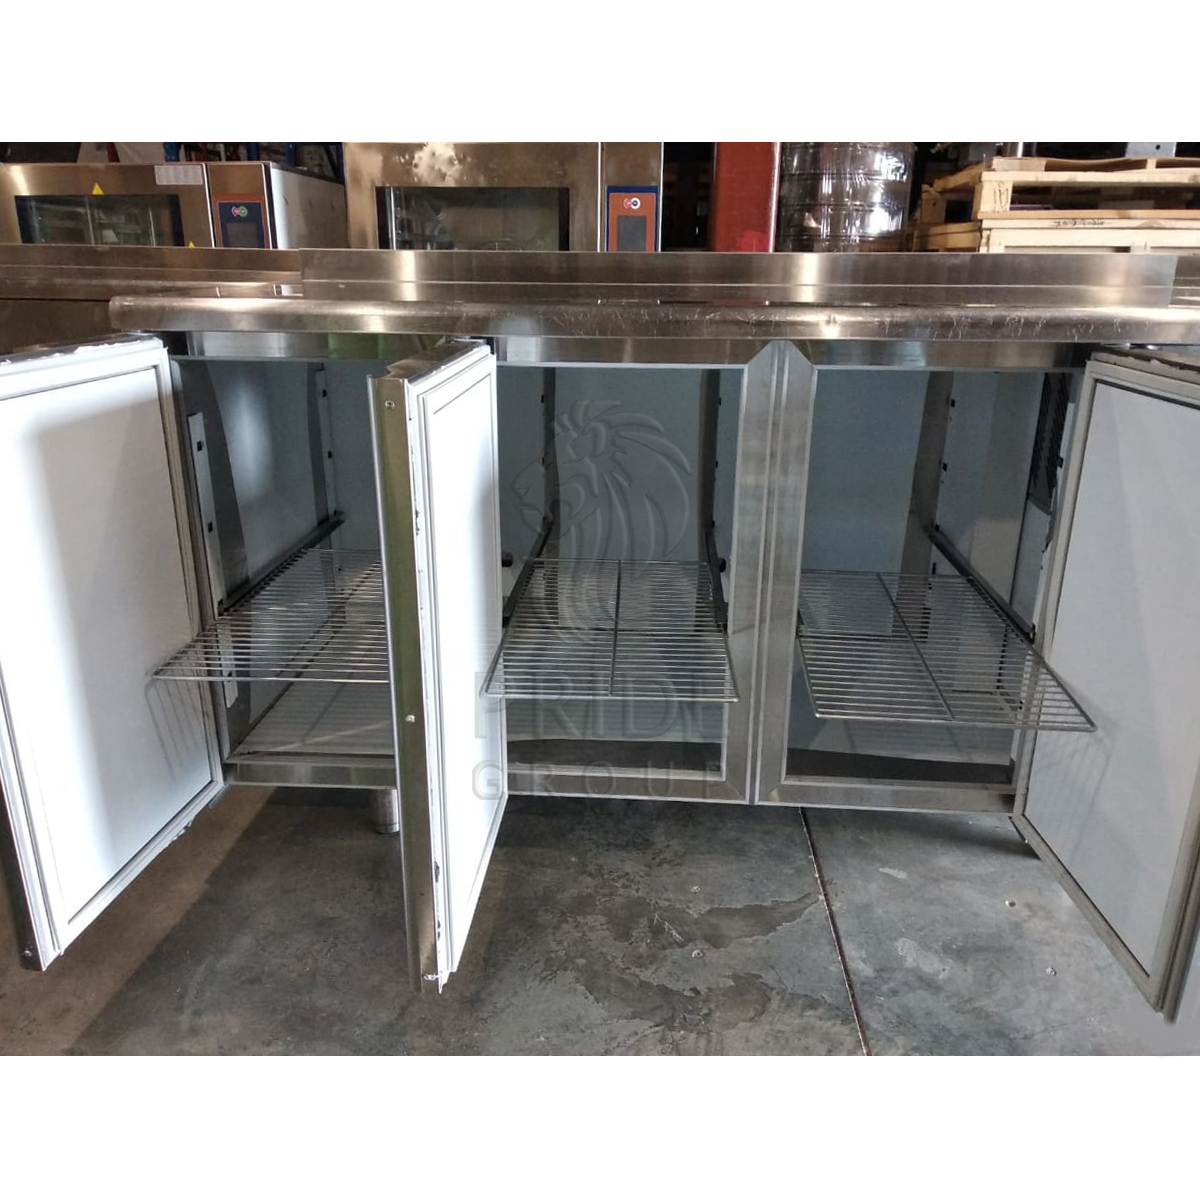 Холодильный стол Polair TM3GN-GC